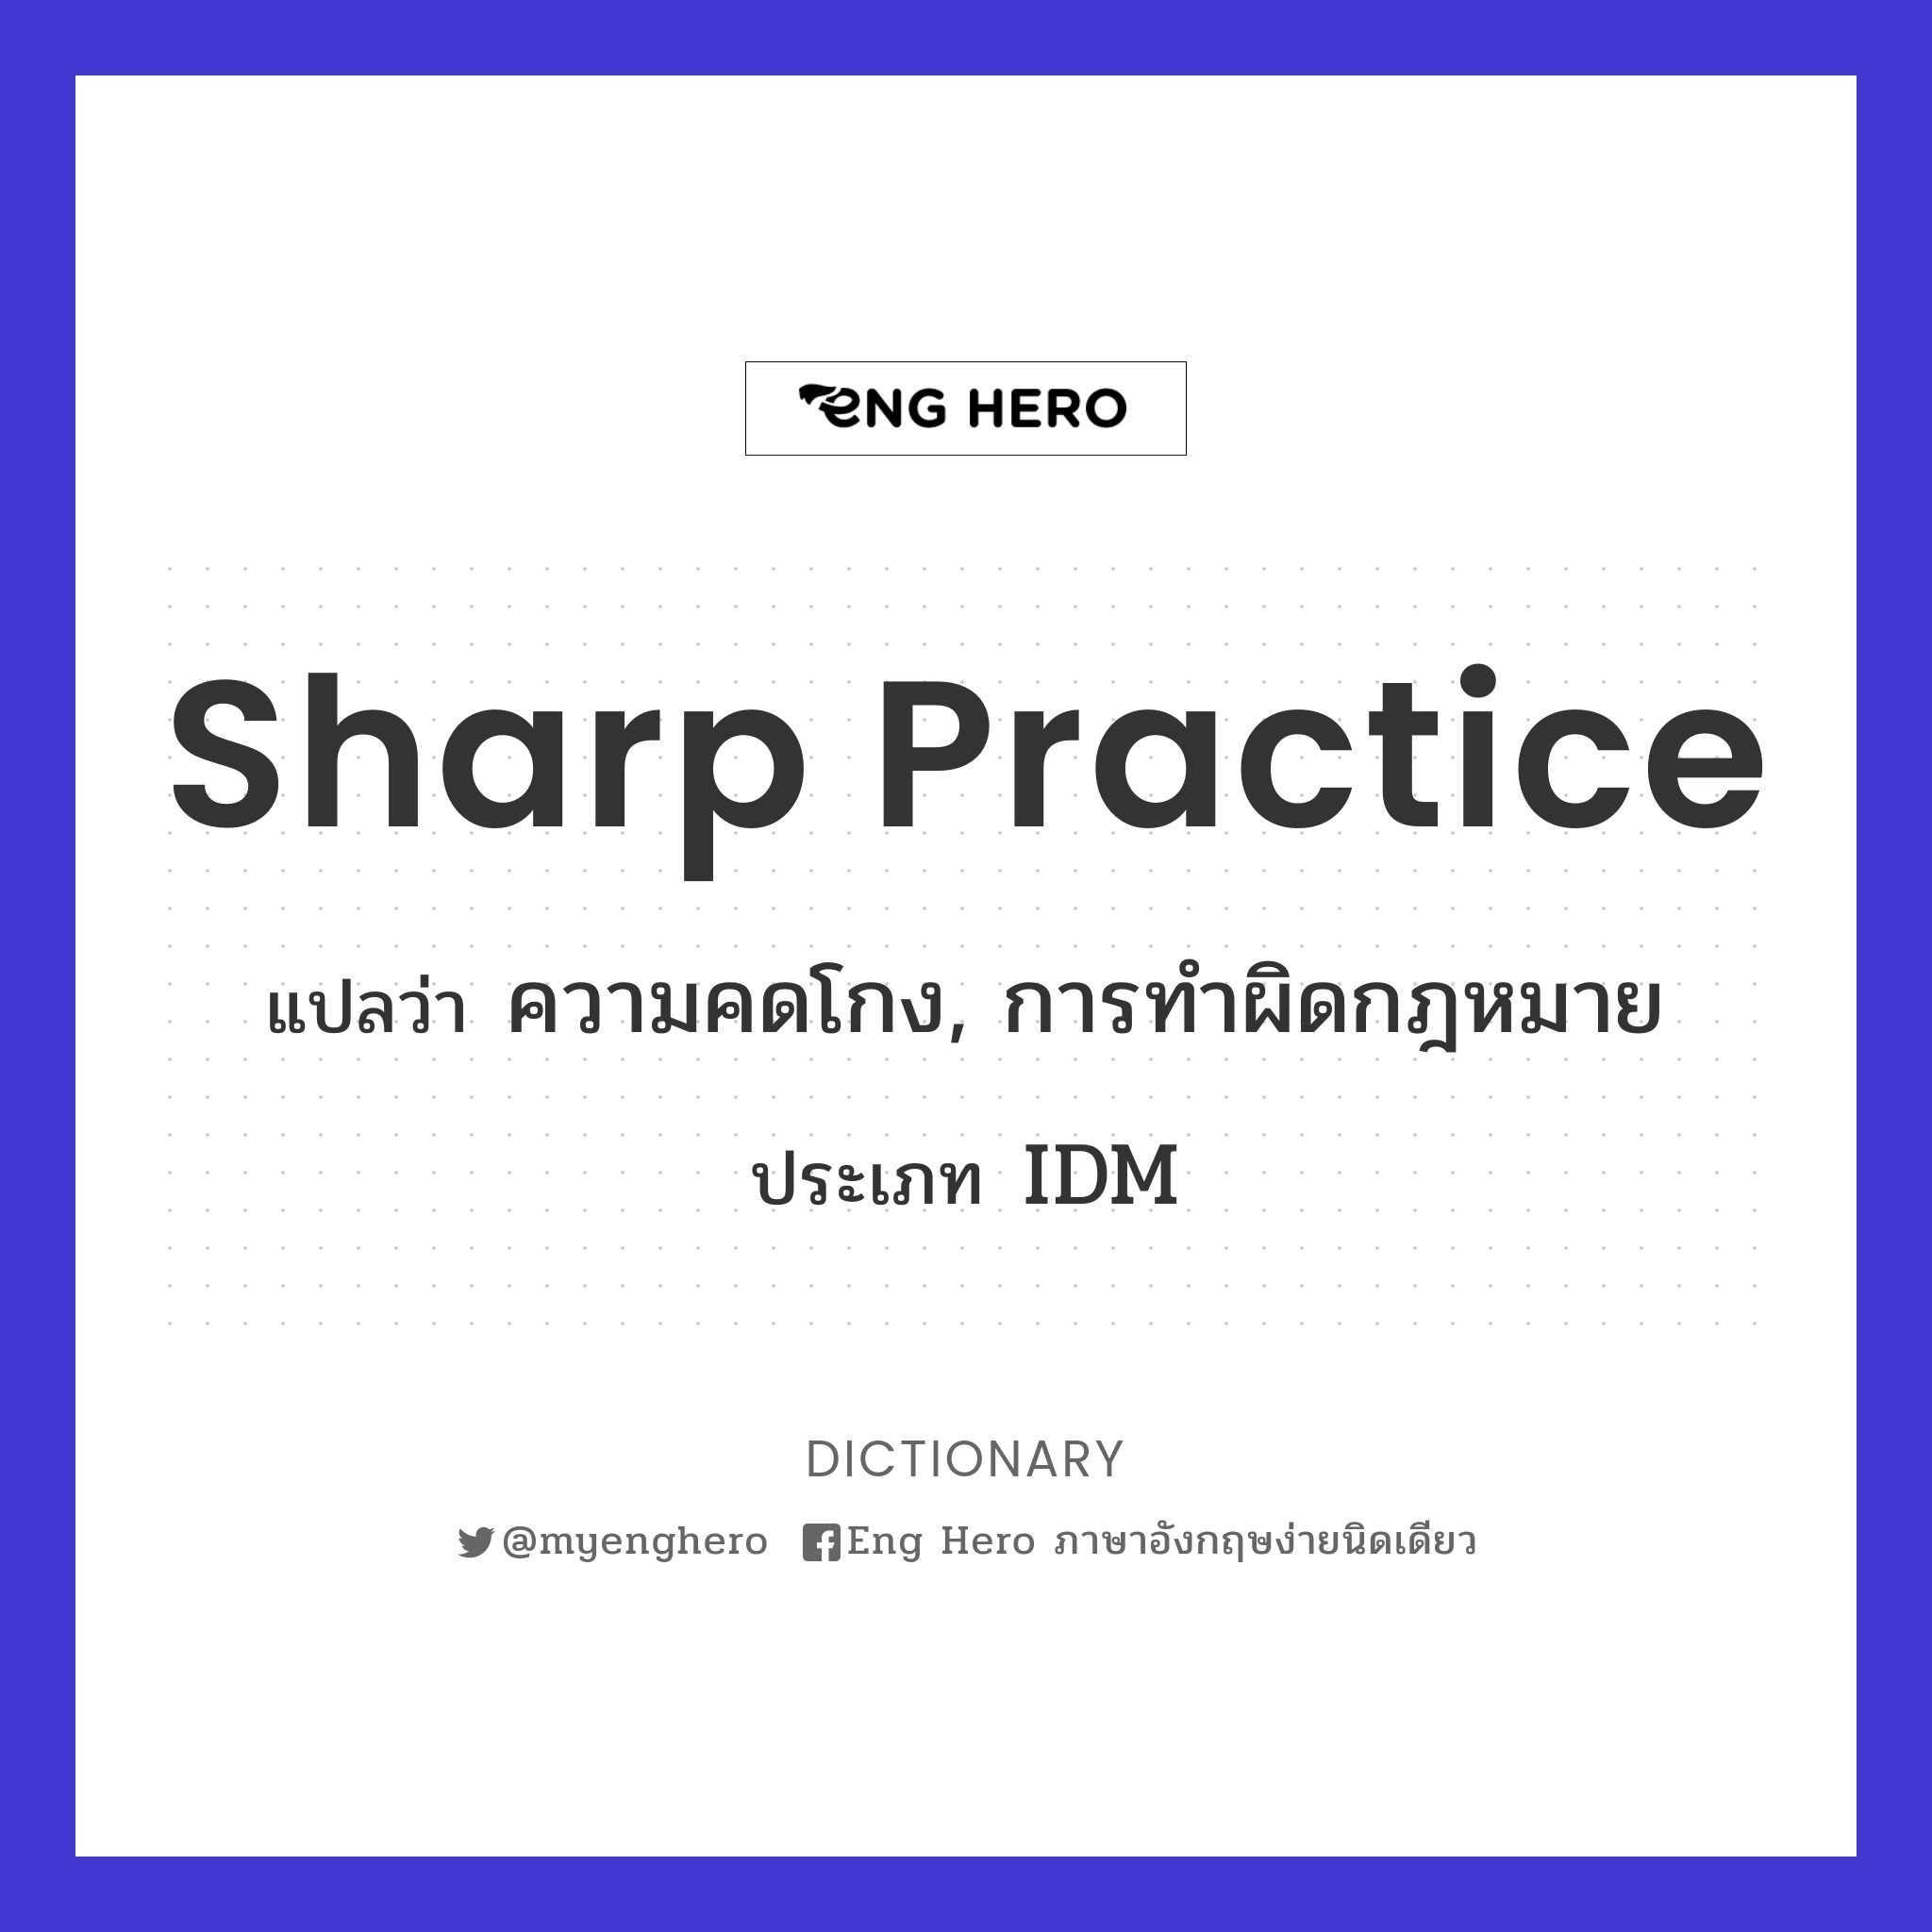 sharp practice